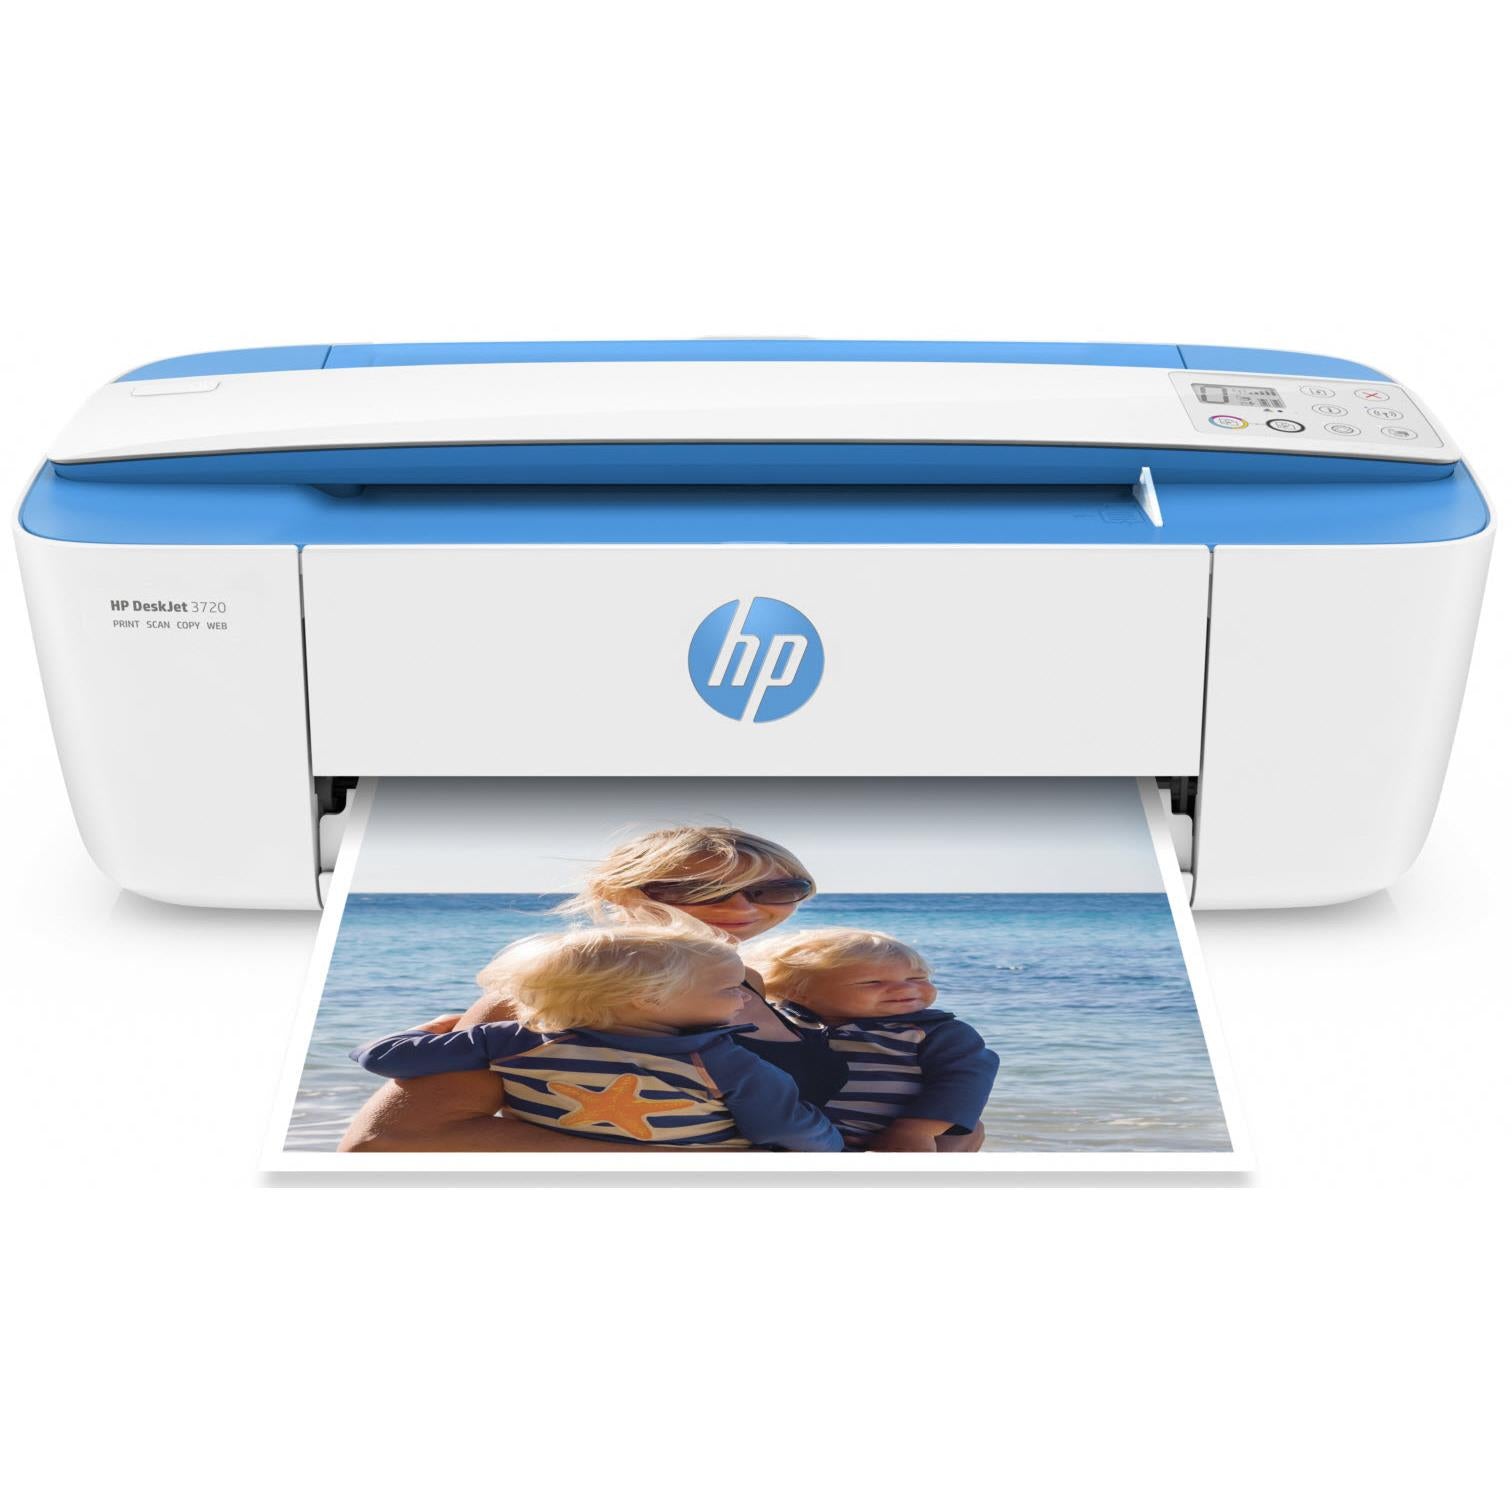 hp deskjet 3720 all-in-one printer